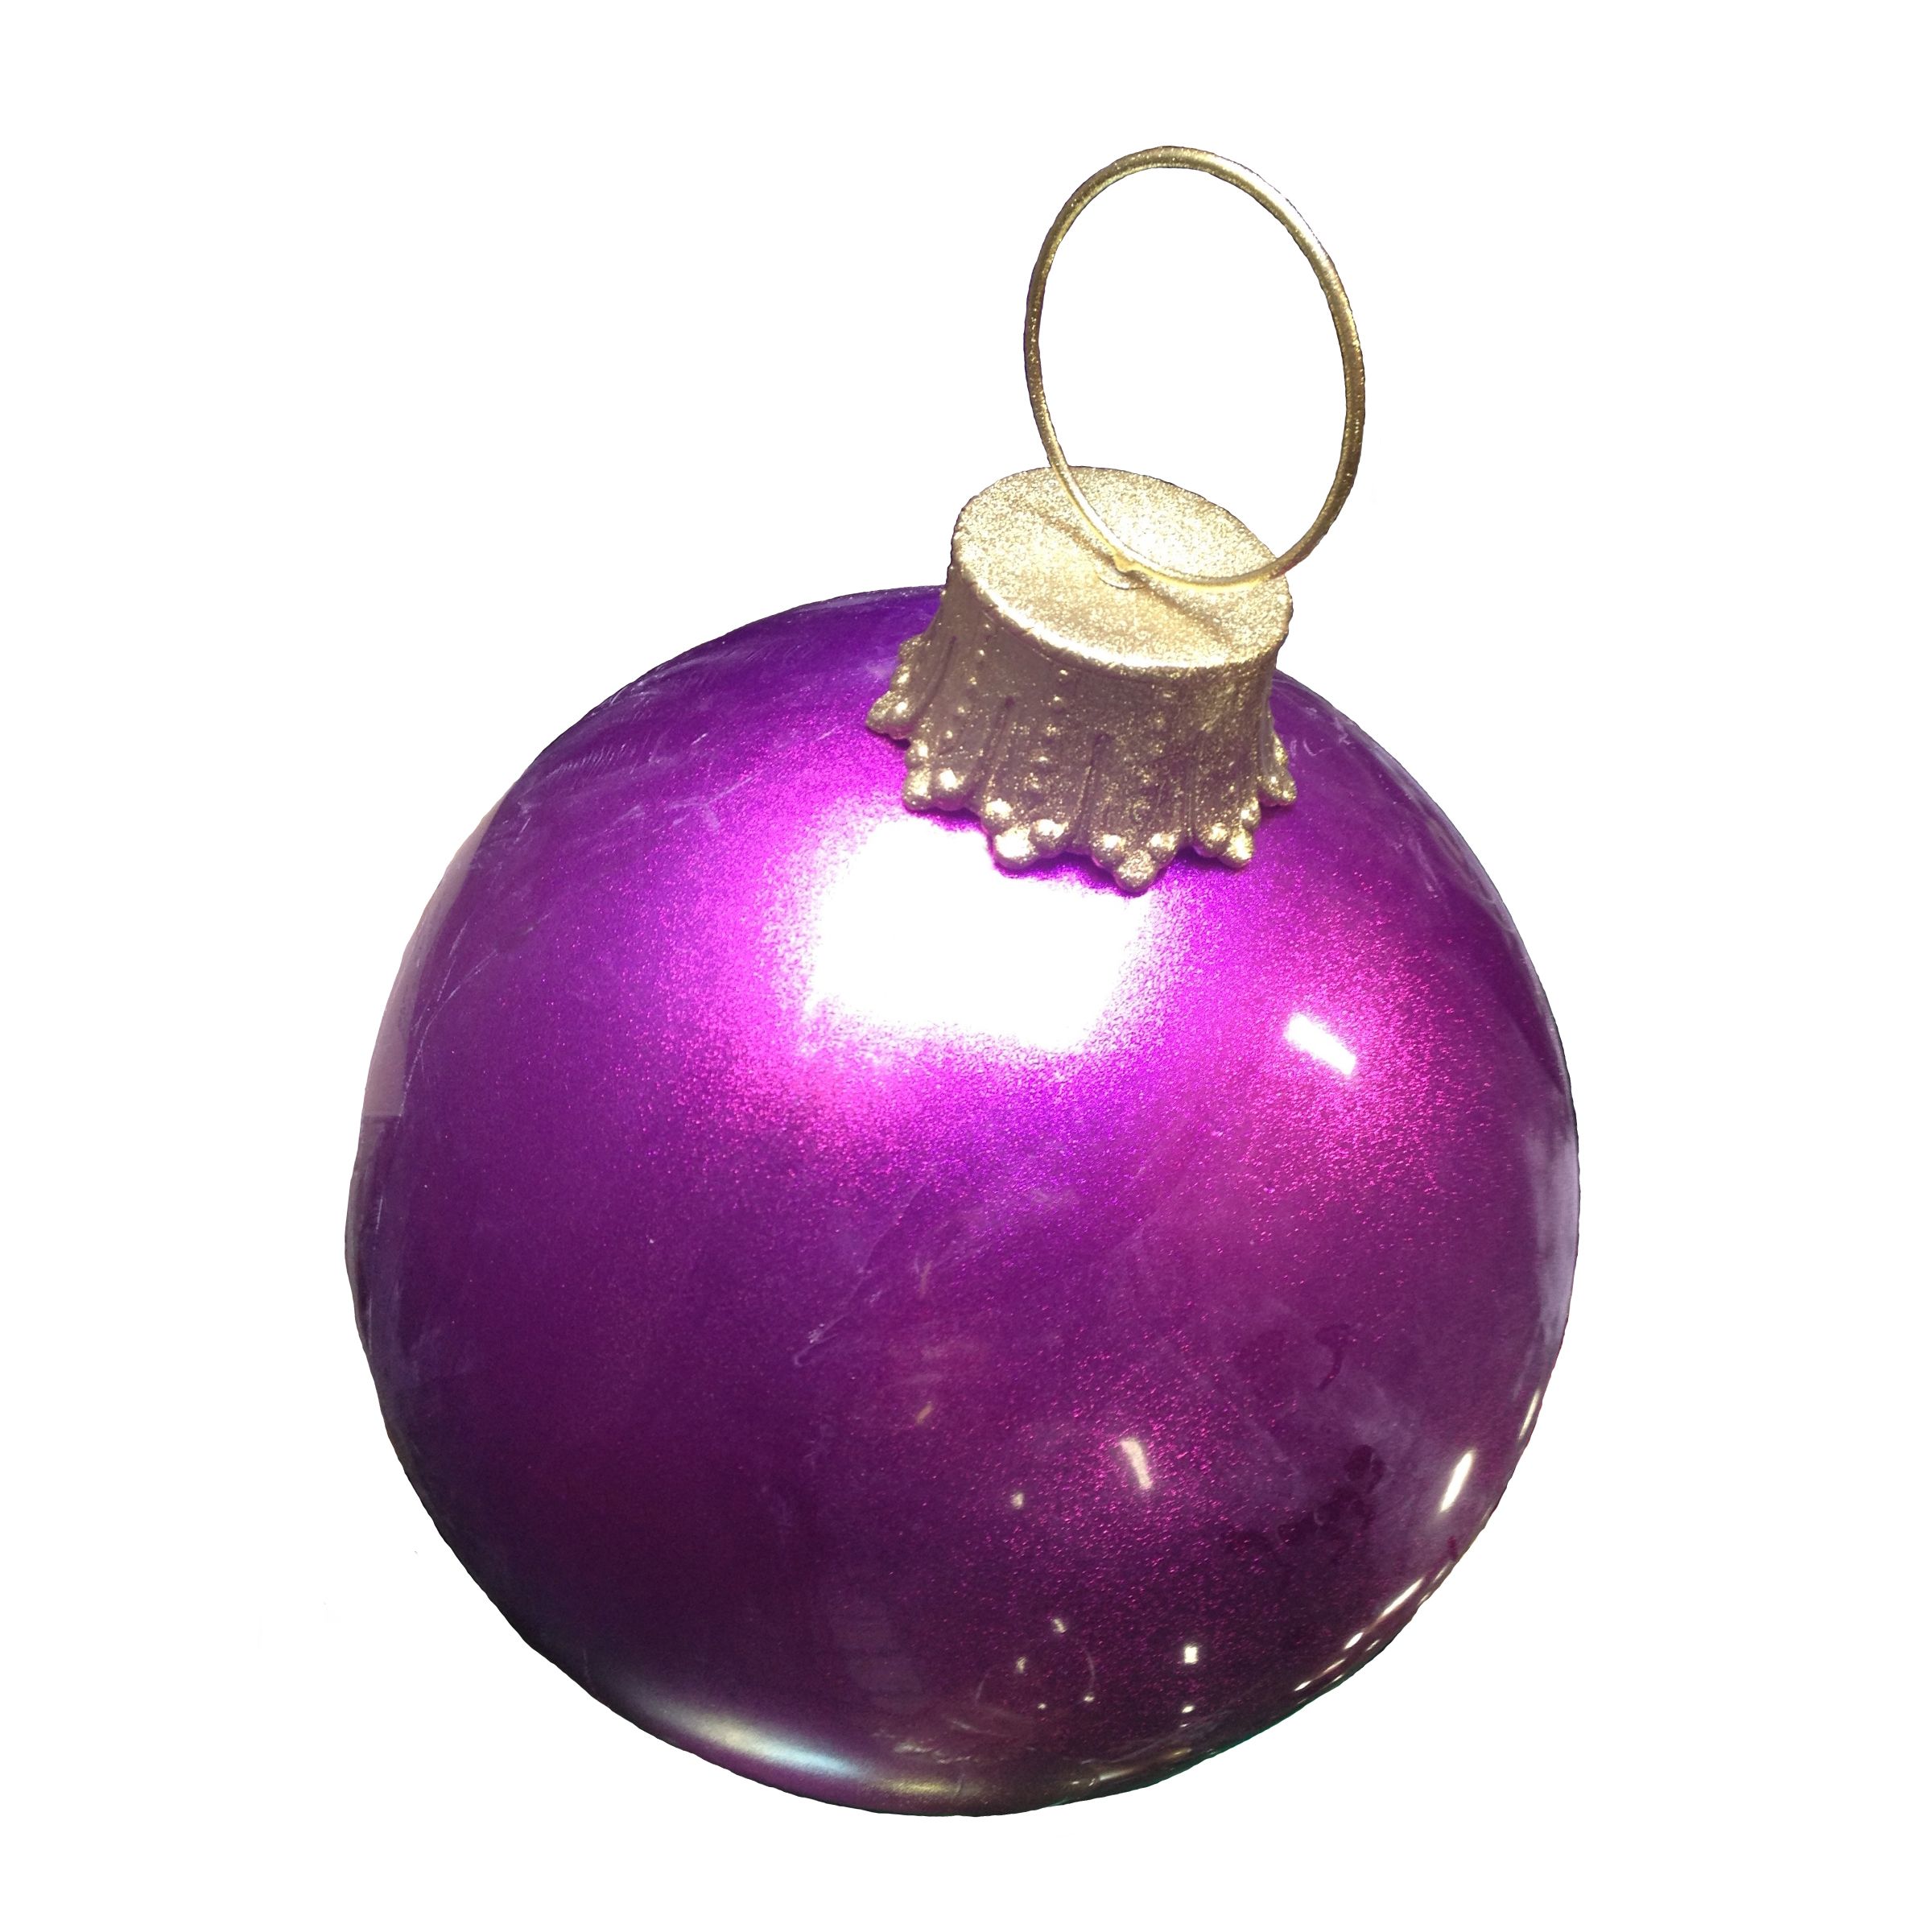 Oversized fiberglass ball ornament in purple glitter paint